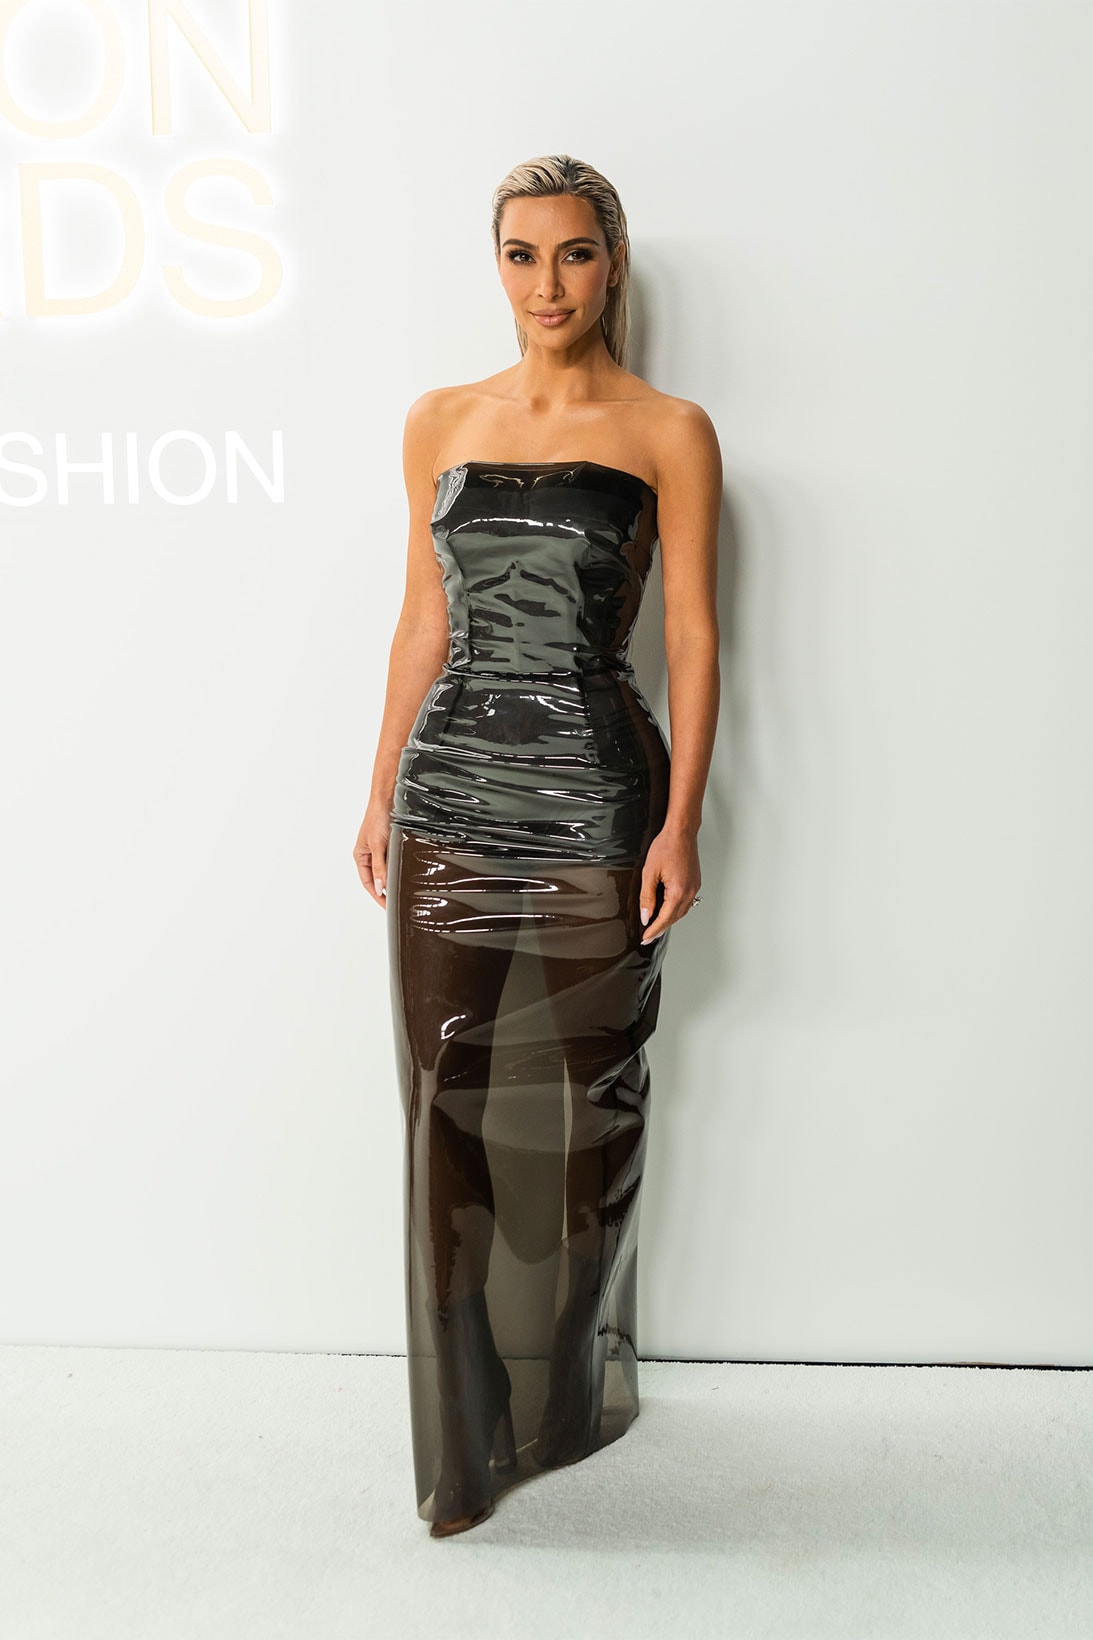 CFDA Fashion Awards Best Dressed Celebrities Red Carpet Outfits Kim Kardashian Kylie Jenner Janelle Monae Images